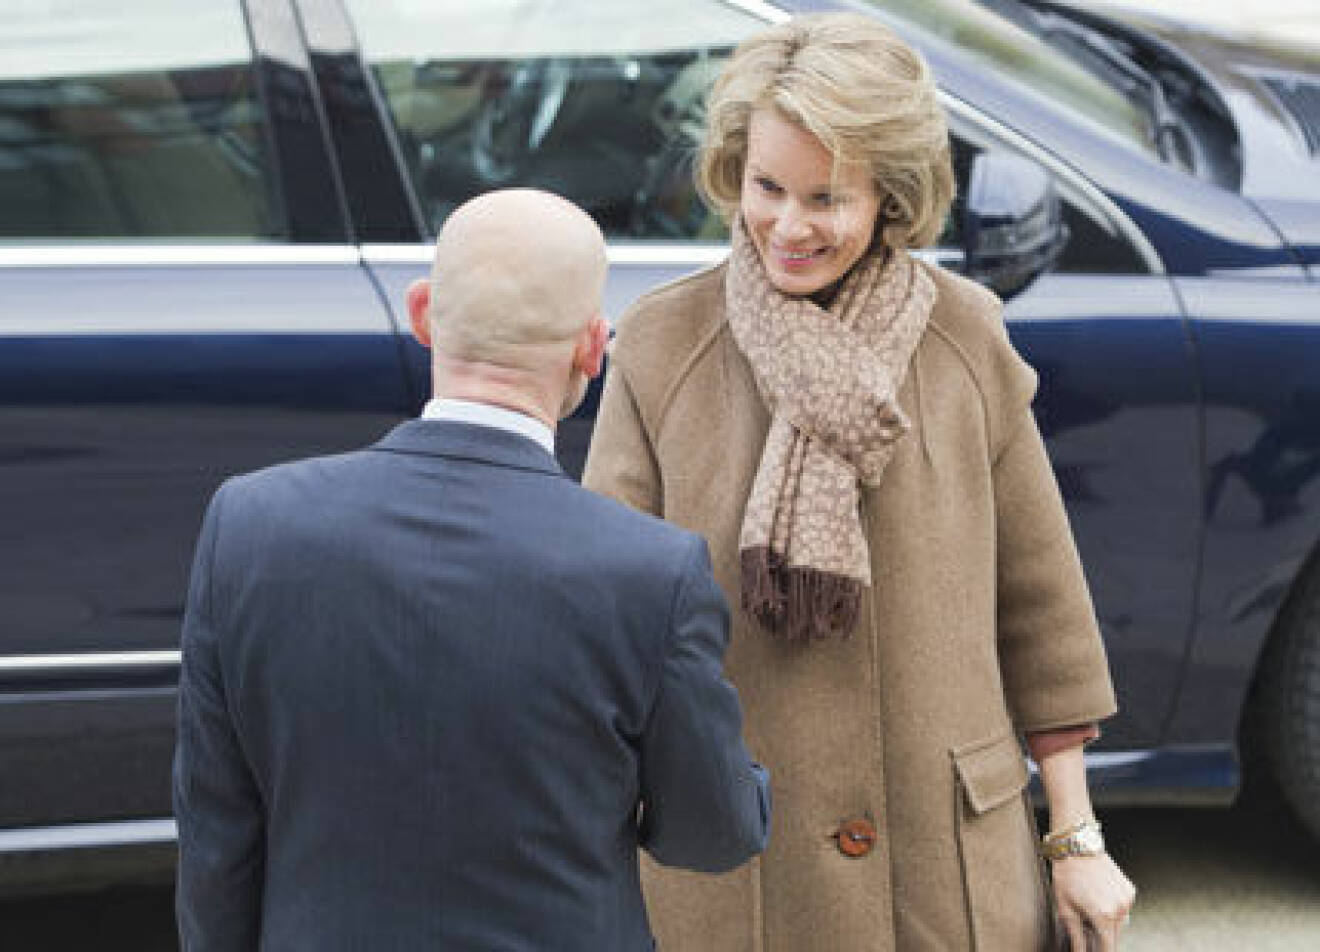 Kronprinsessan Mathilde i beige vinterrock och matchande halsduk i ljusare nyans.